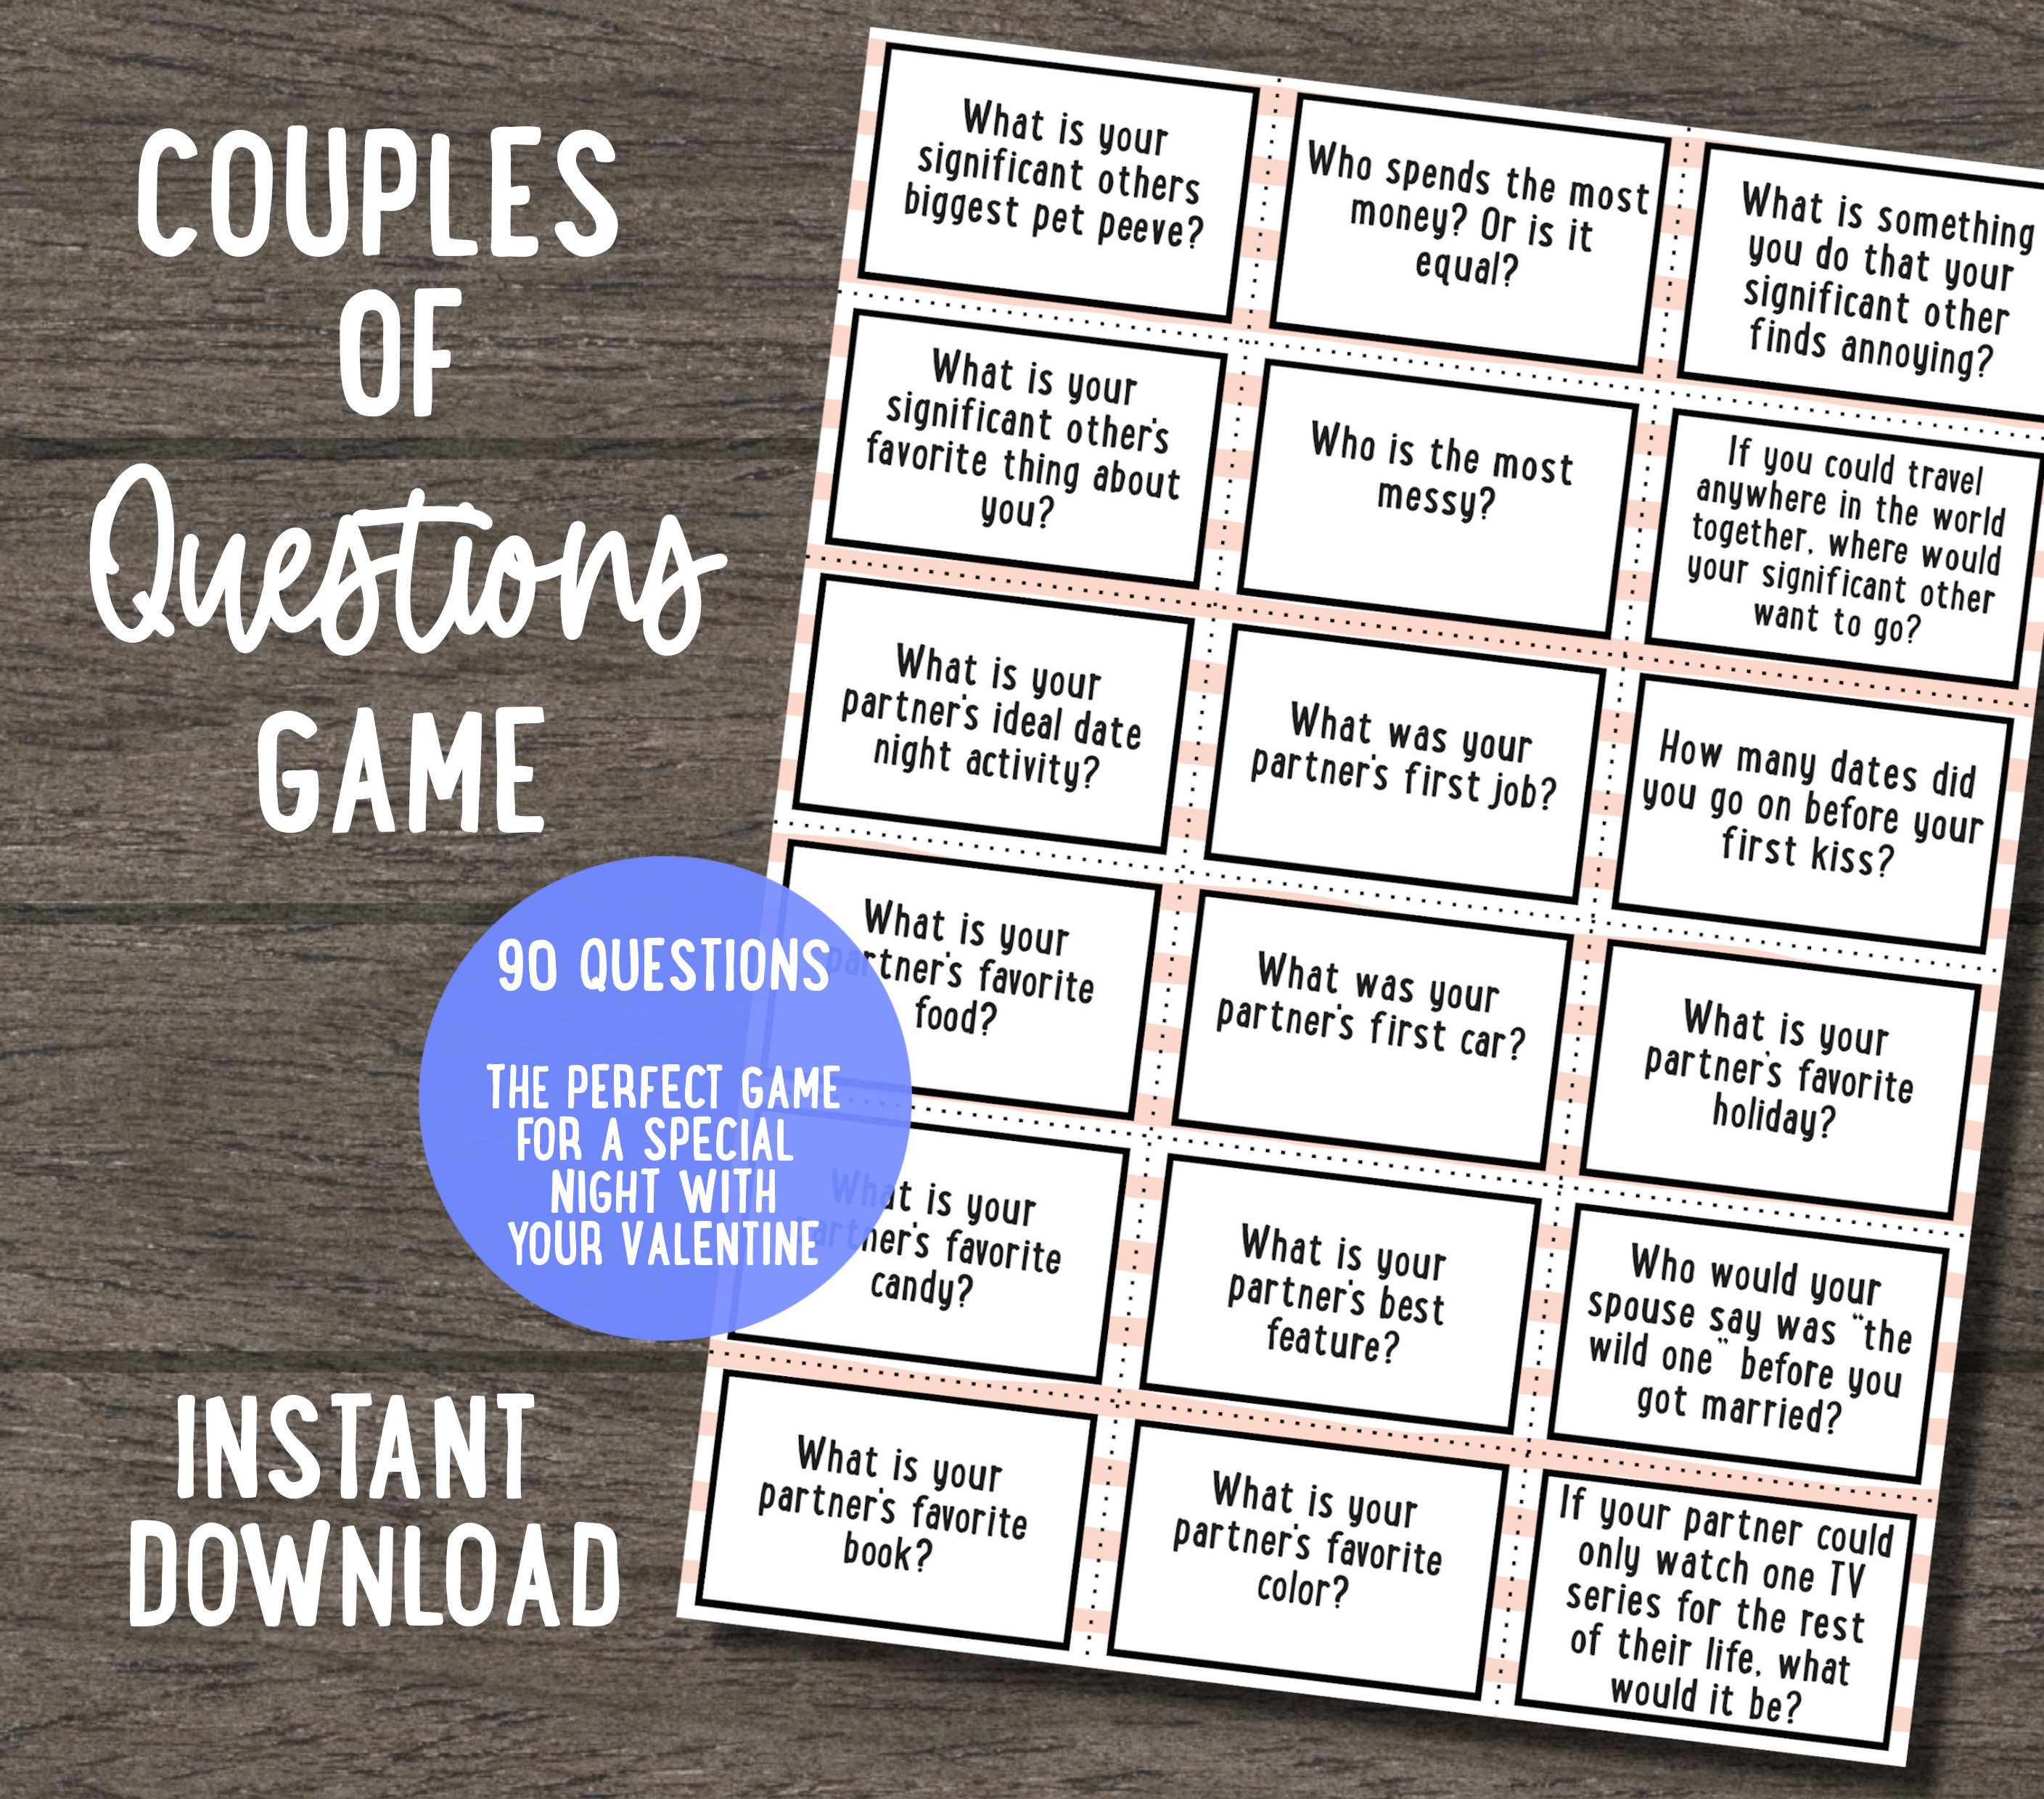 100 fragen zum kennenlernen: a must-try game for couples